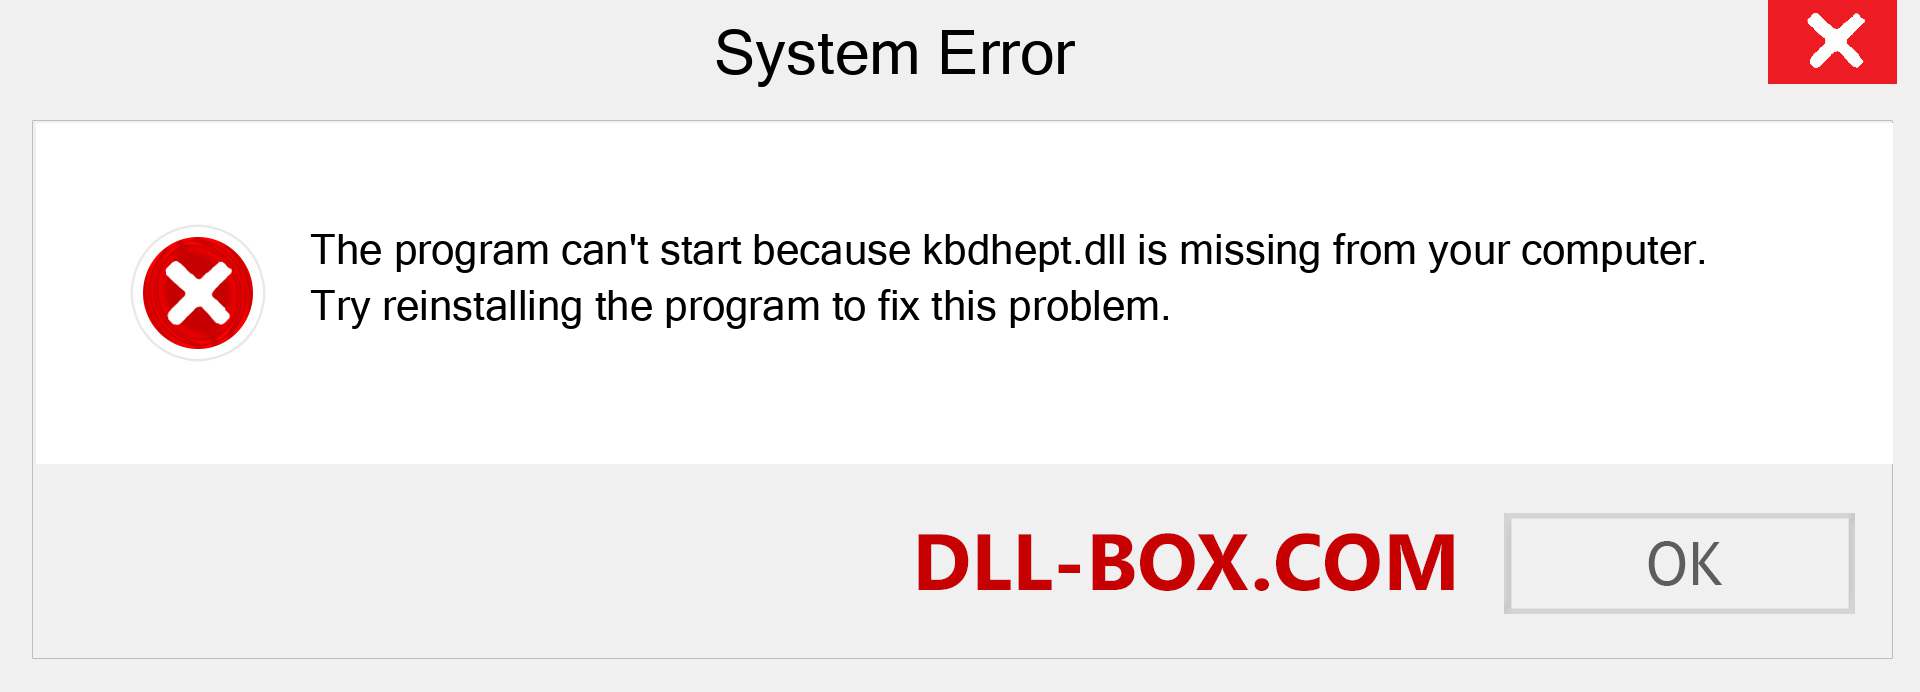  kbdhept.dll file is missing?. Download for Windows 7, 8, 10 - Fix  kbdhept dll Missing Error on Windows, photos, images